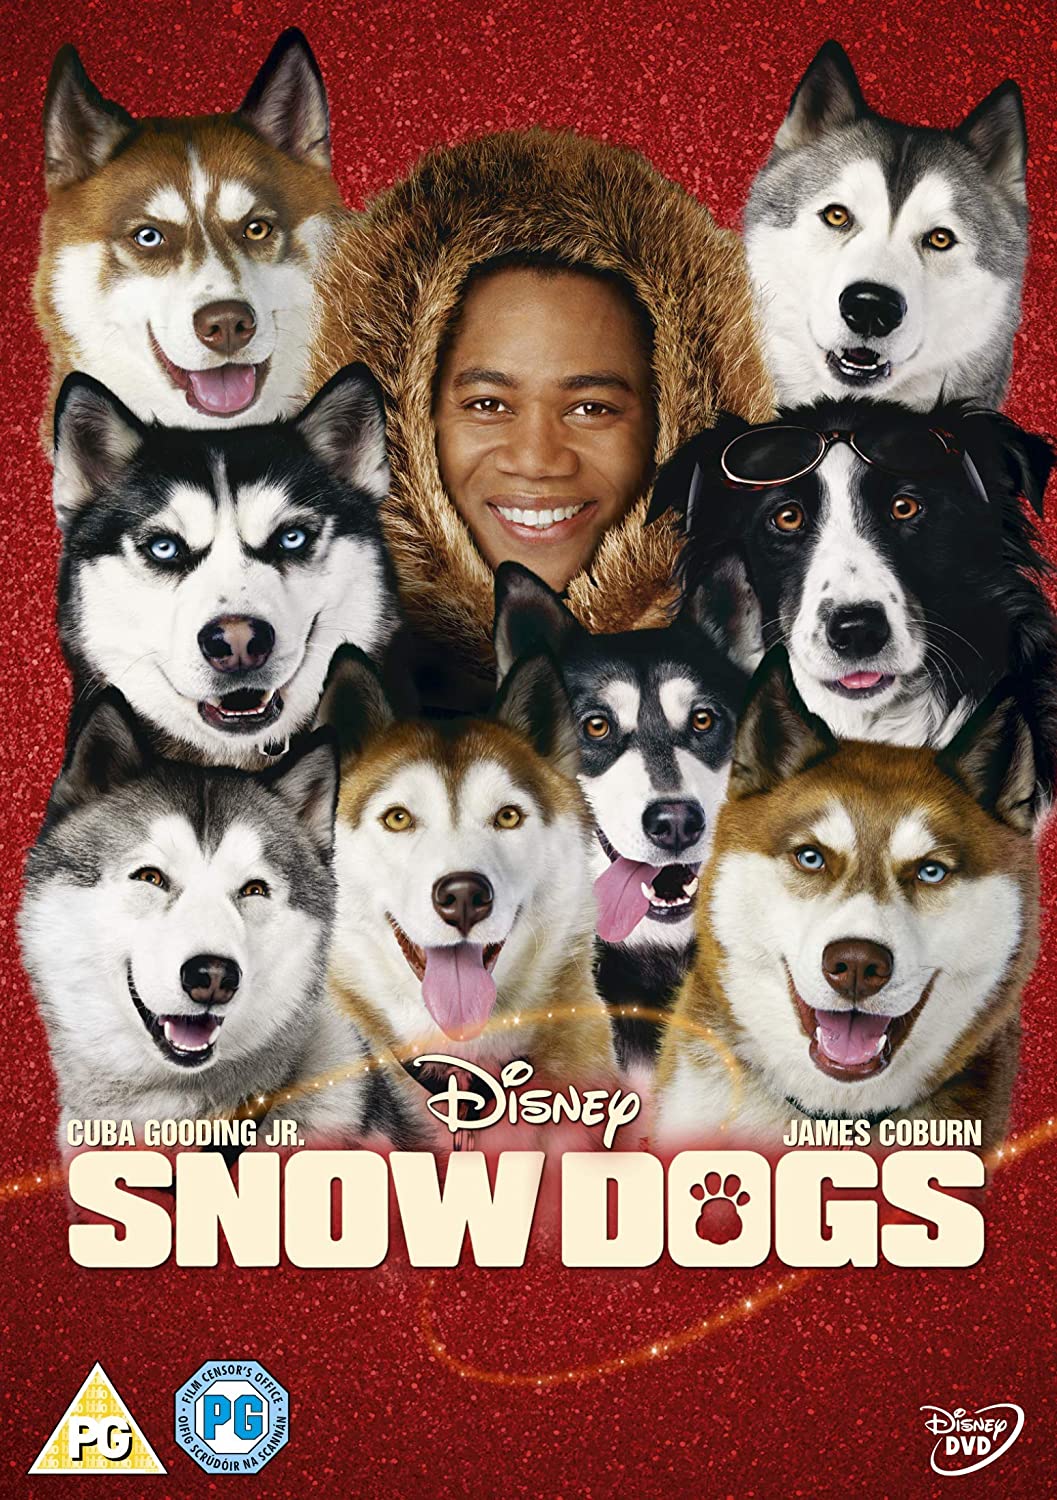 Snow Dogs - Family/Comedy [DVD]